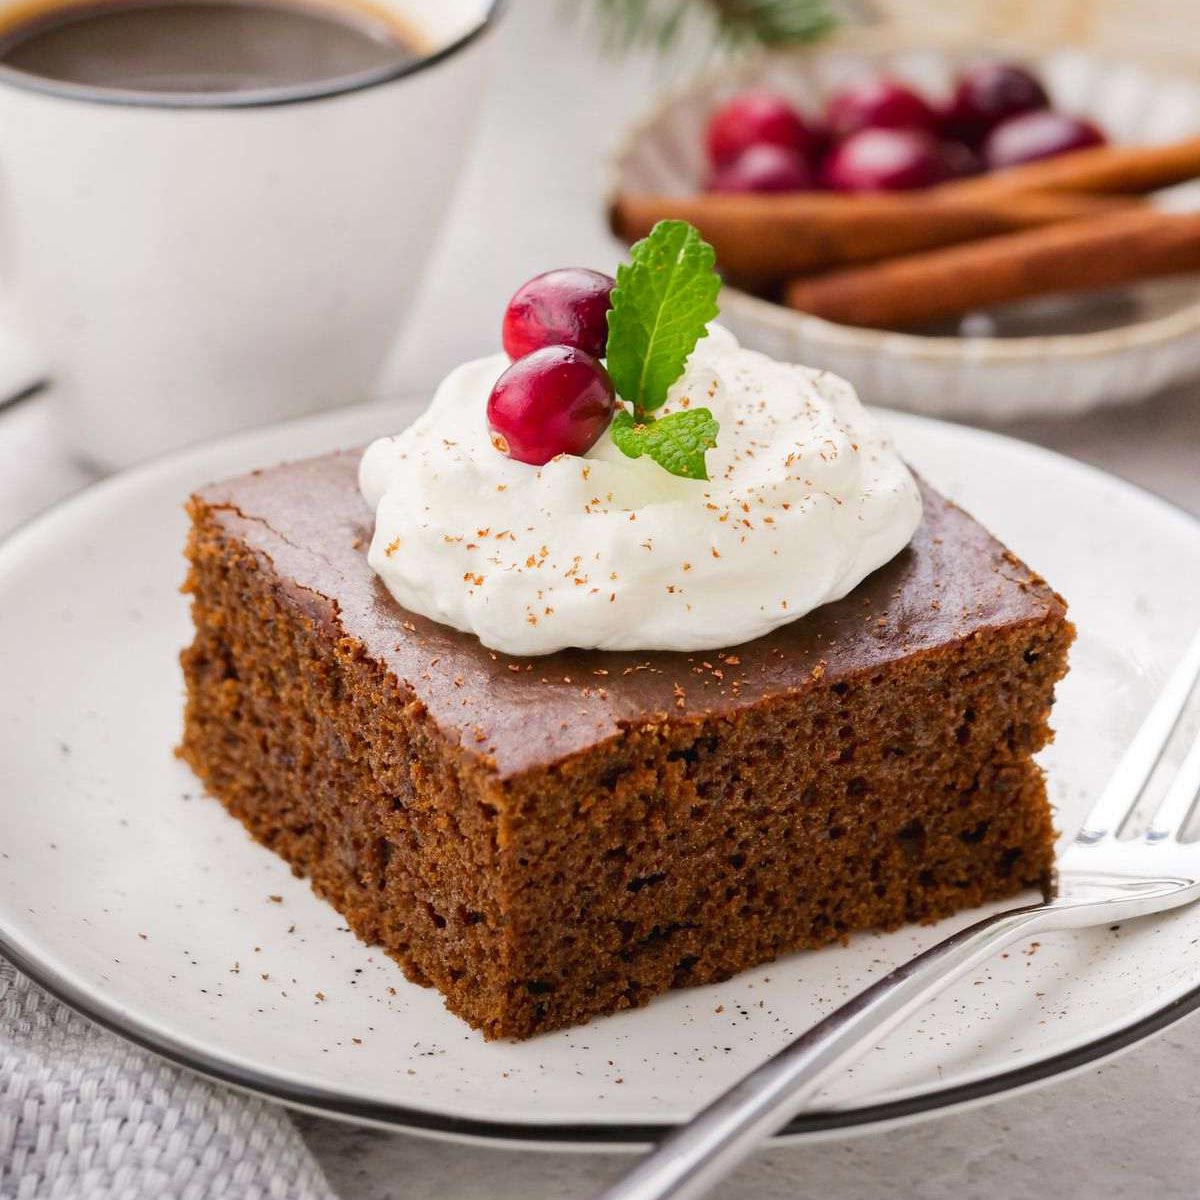 https://www.texanerin.com/content/uploads/2021/12/gluten-free-gingerbread-cake-image-1200.jpg